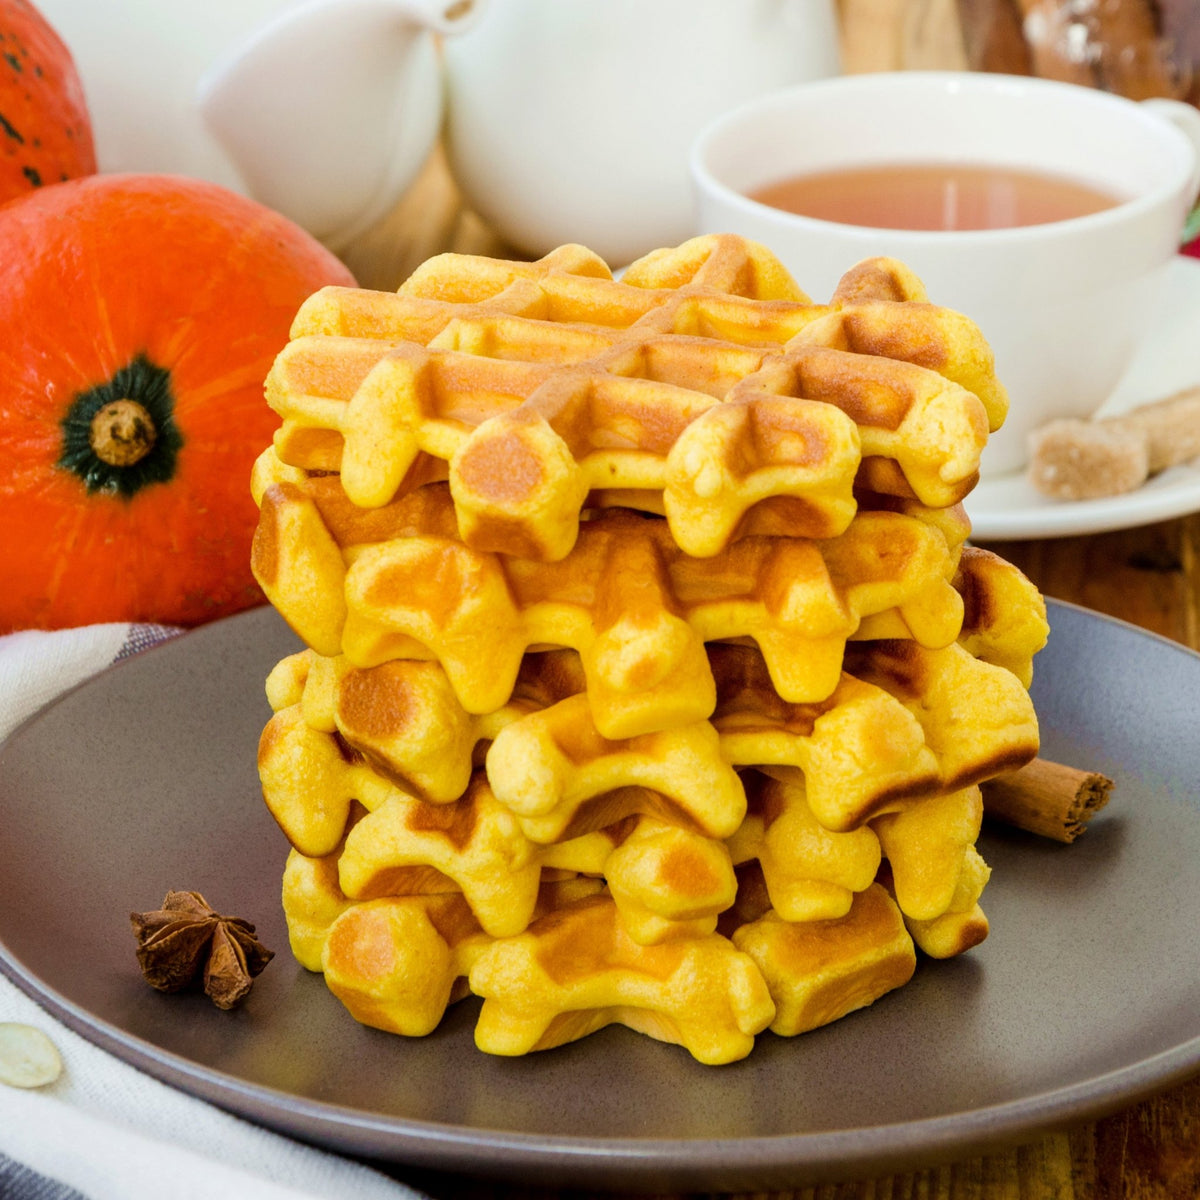 Cinnamon Pumpkin Protein Mini Waffles – Devotion Nutrition